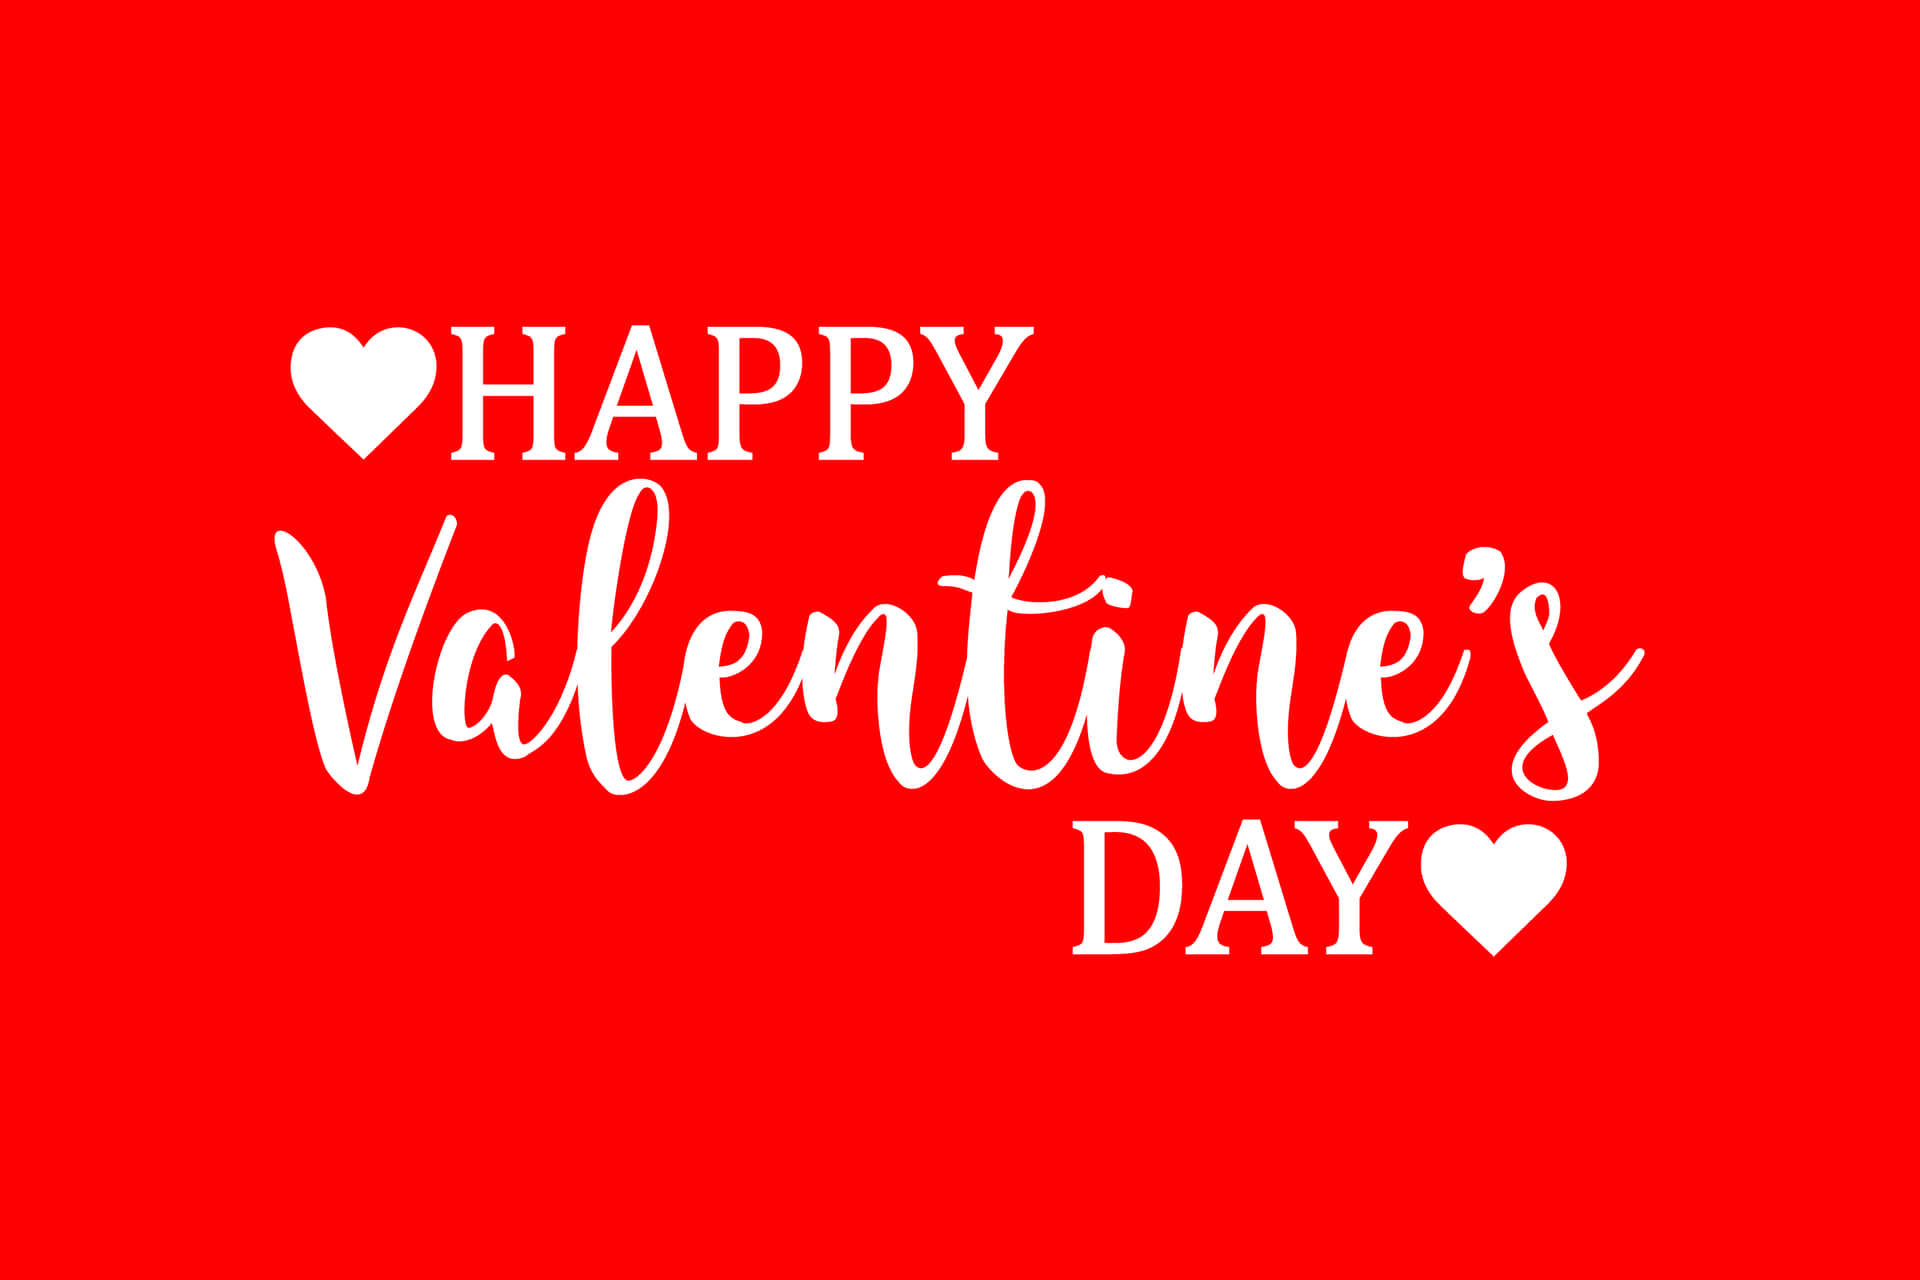 Celebrate Love this Valentines